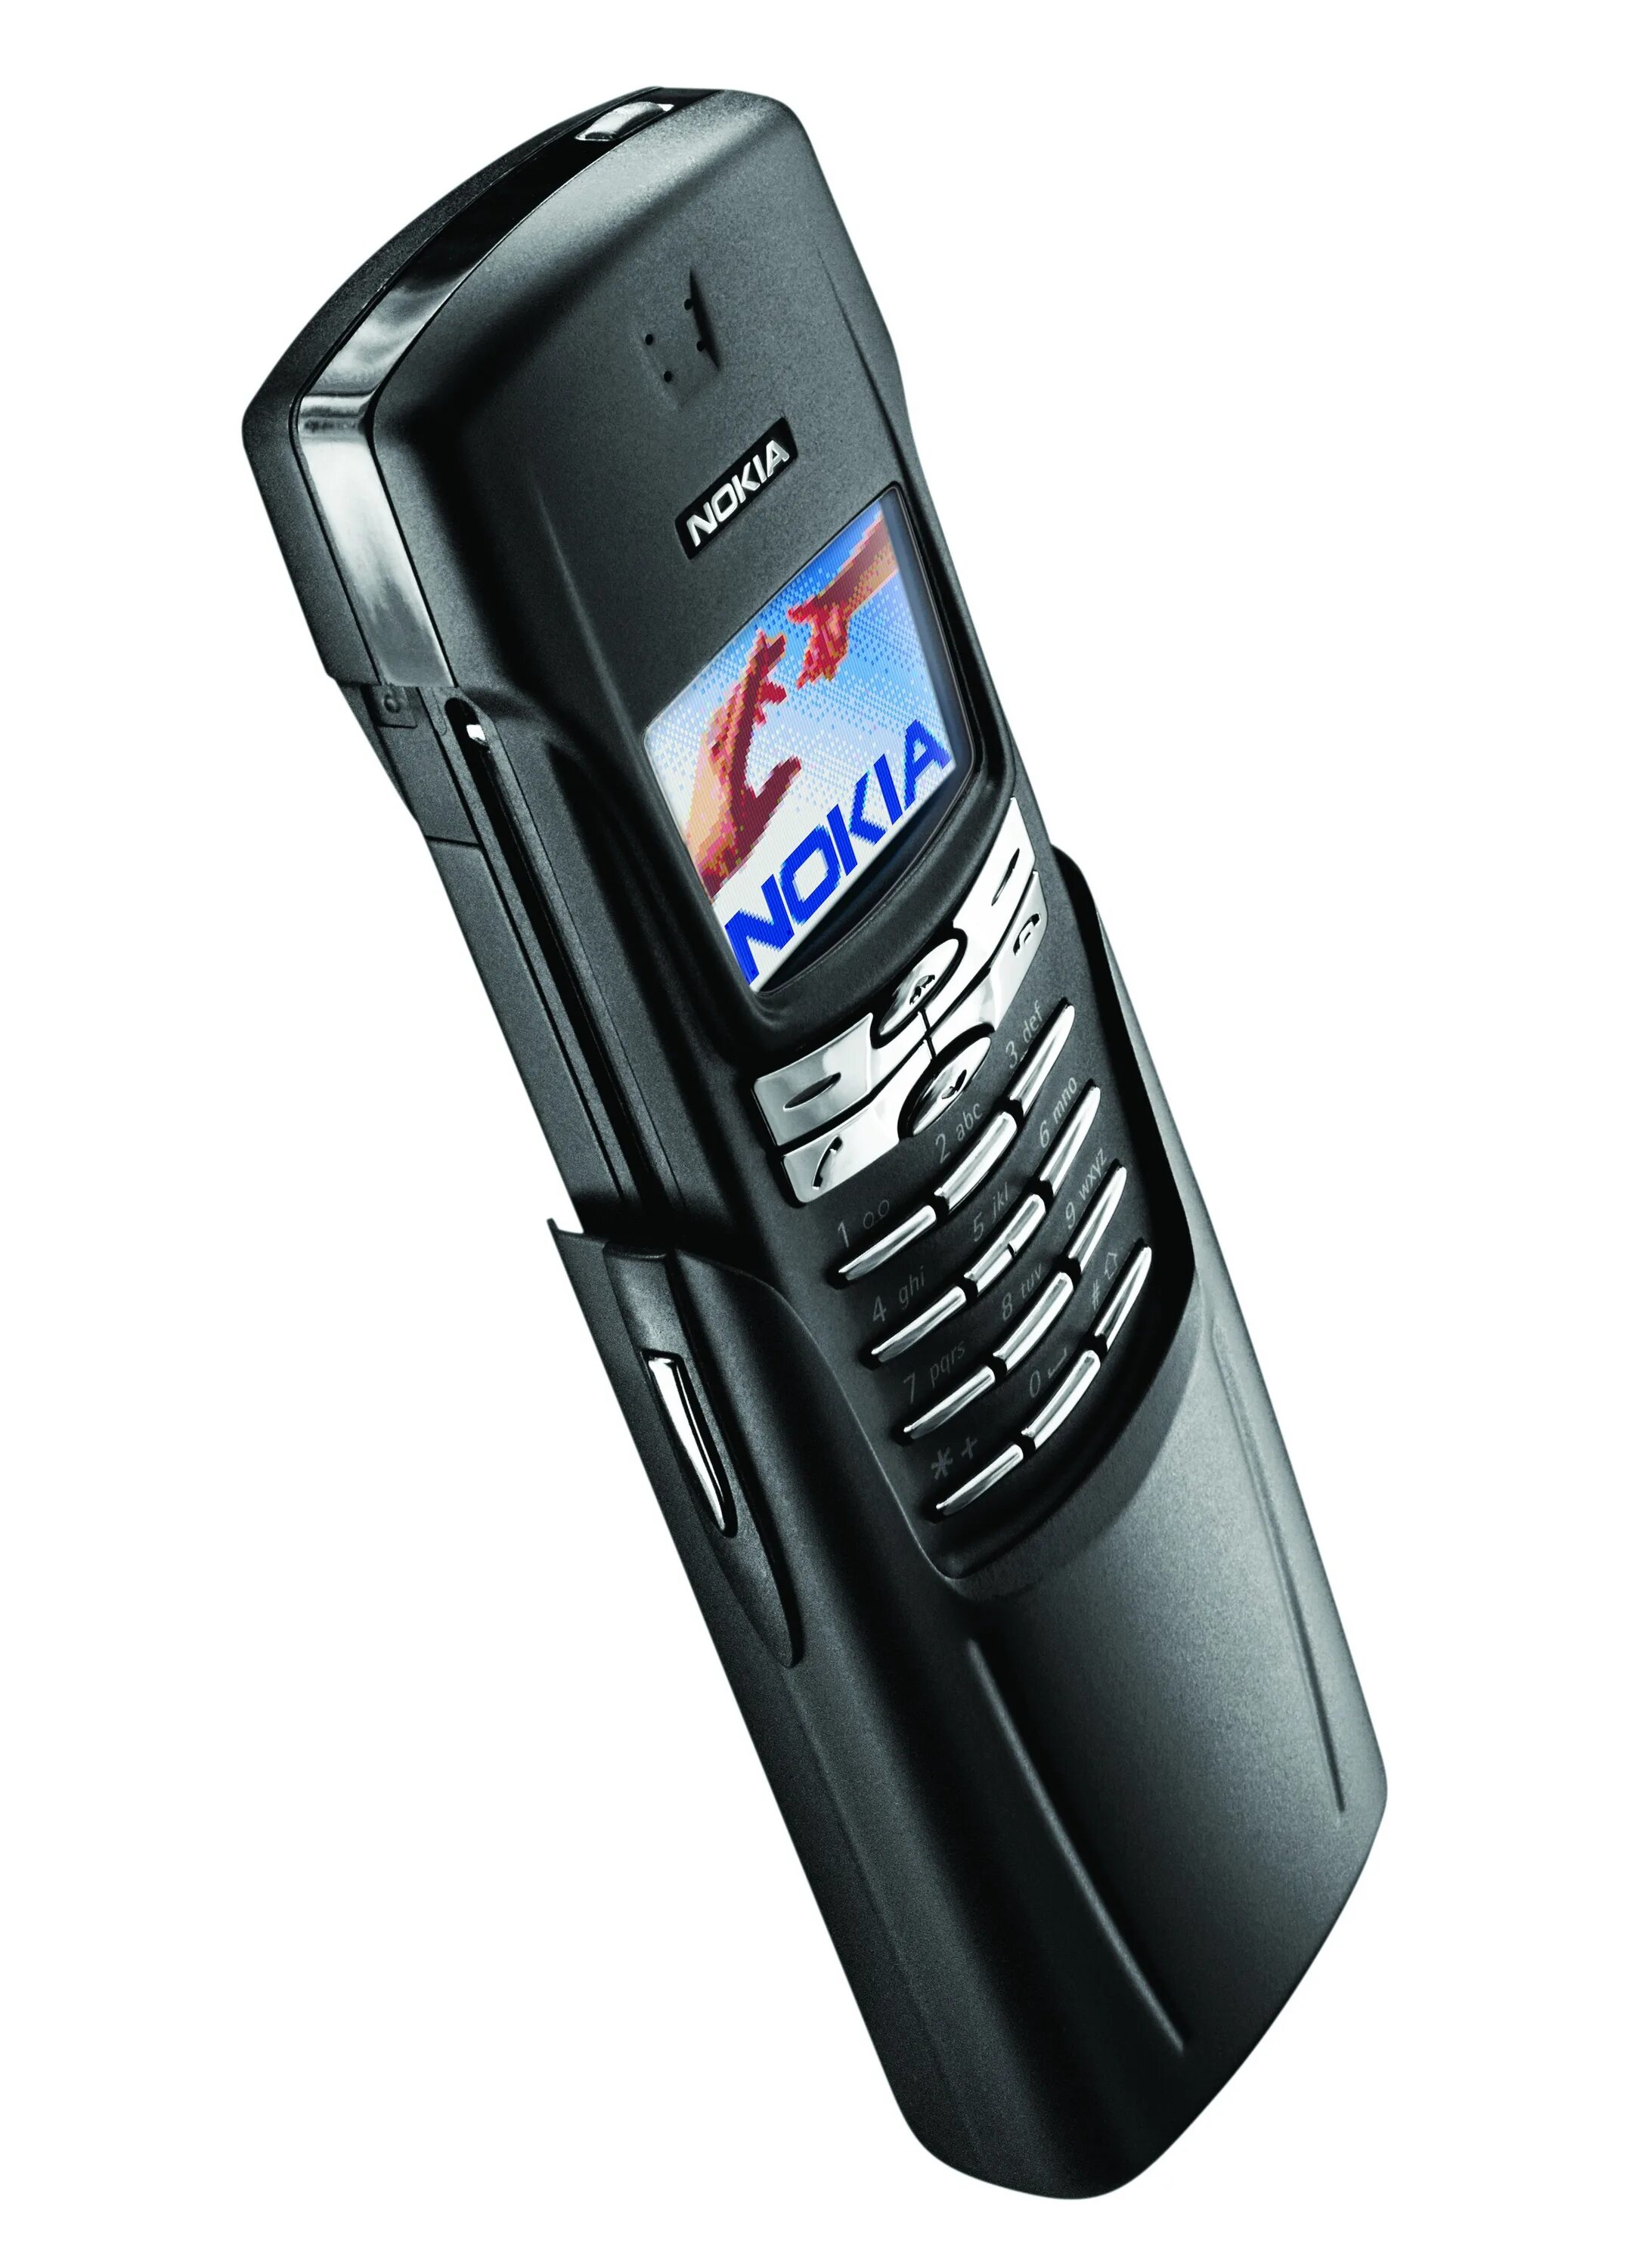 Nokia 8910i. Нокия Титан 8910. Нокиа в титановом корпусе 8910i. Nokia титановый корпус 8910i. Корпус мобильные телефоны